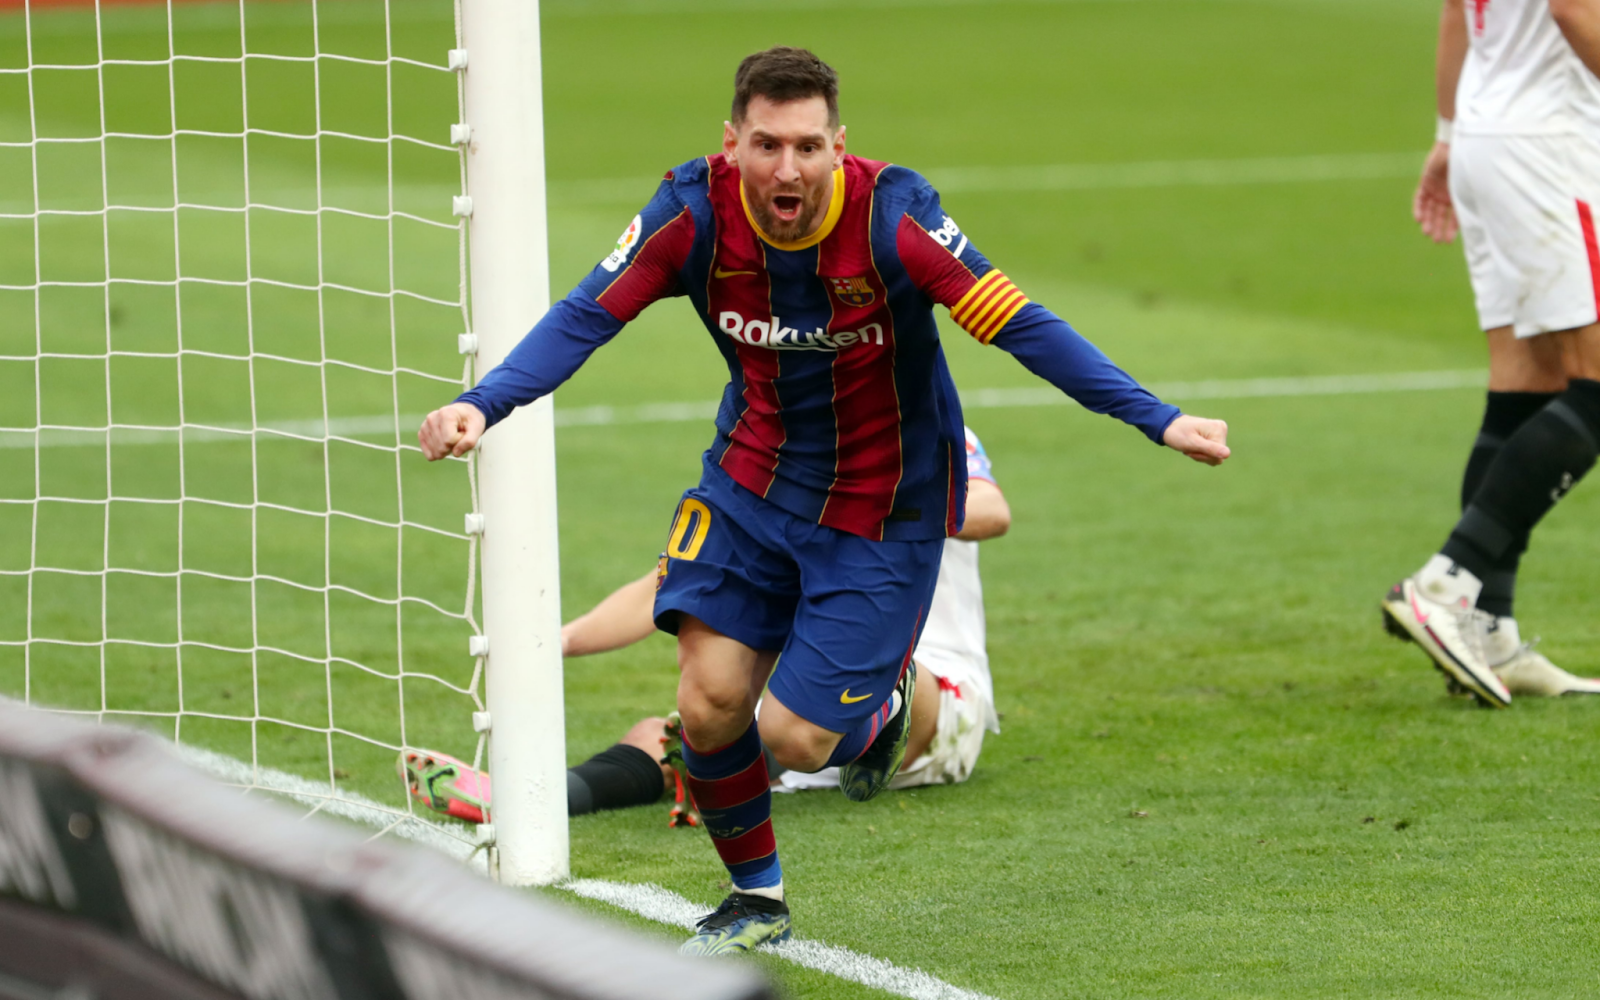 <u>Query</u>: Captain of the Argentina national football team celebrating after scoring a goal<br>
      <u>Named Entity</u>: Lionel Messi